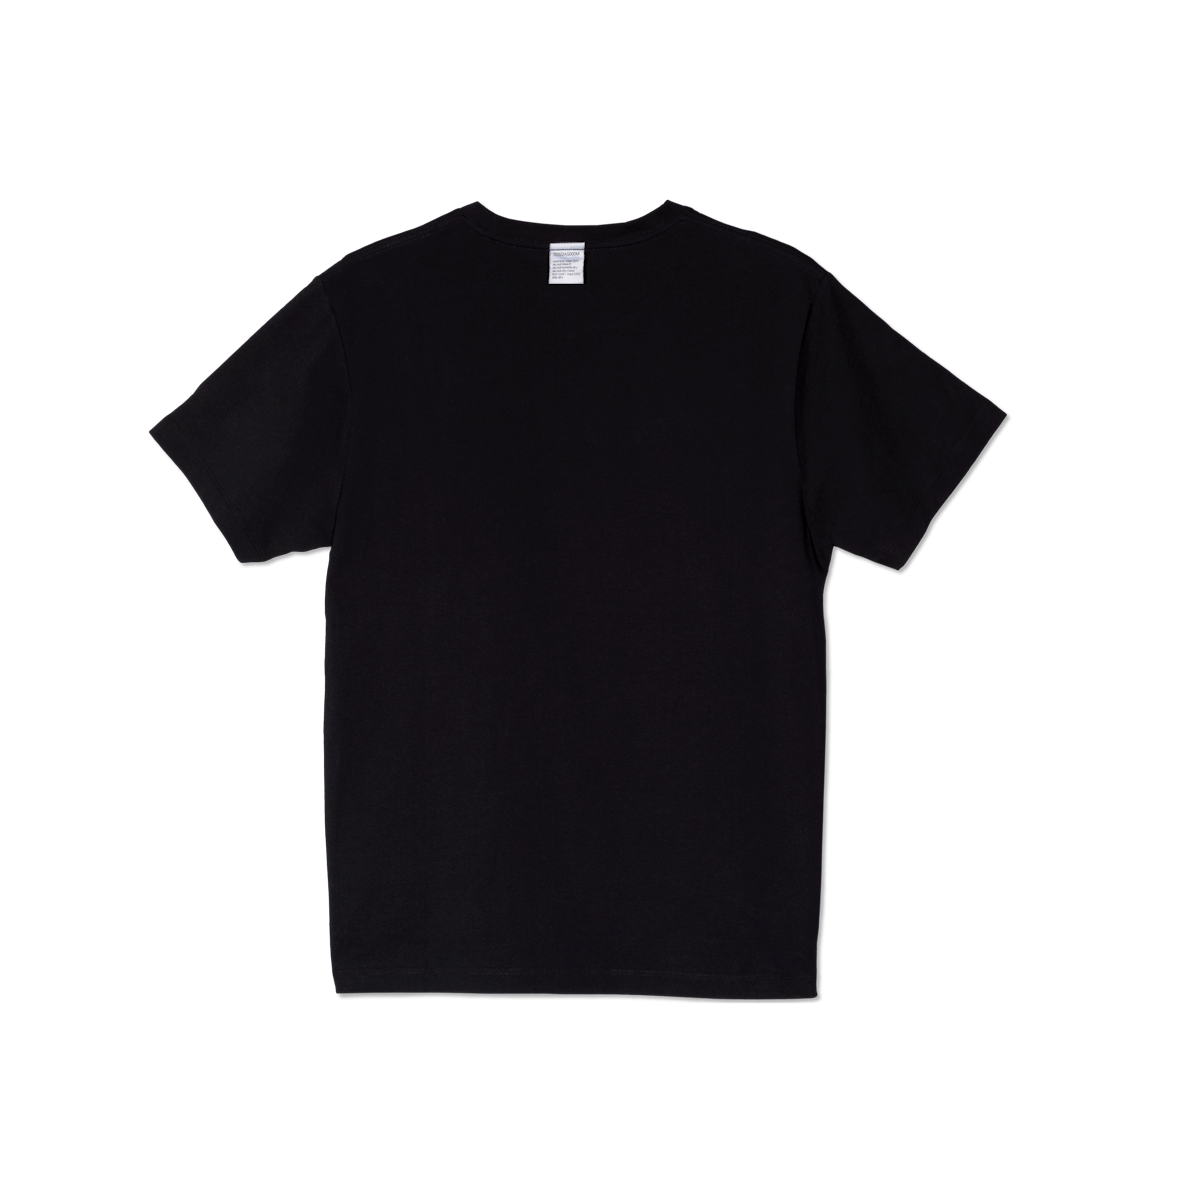 rudberg t-shirt black - teenage engineering